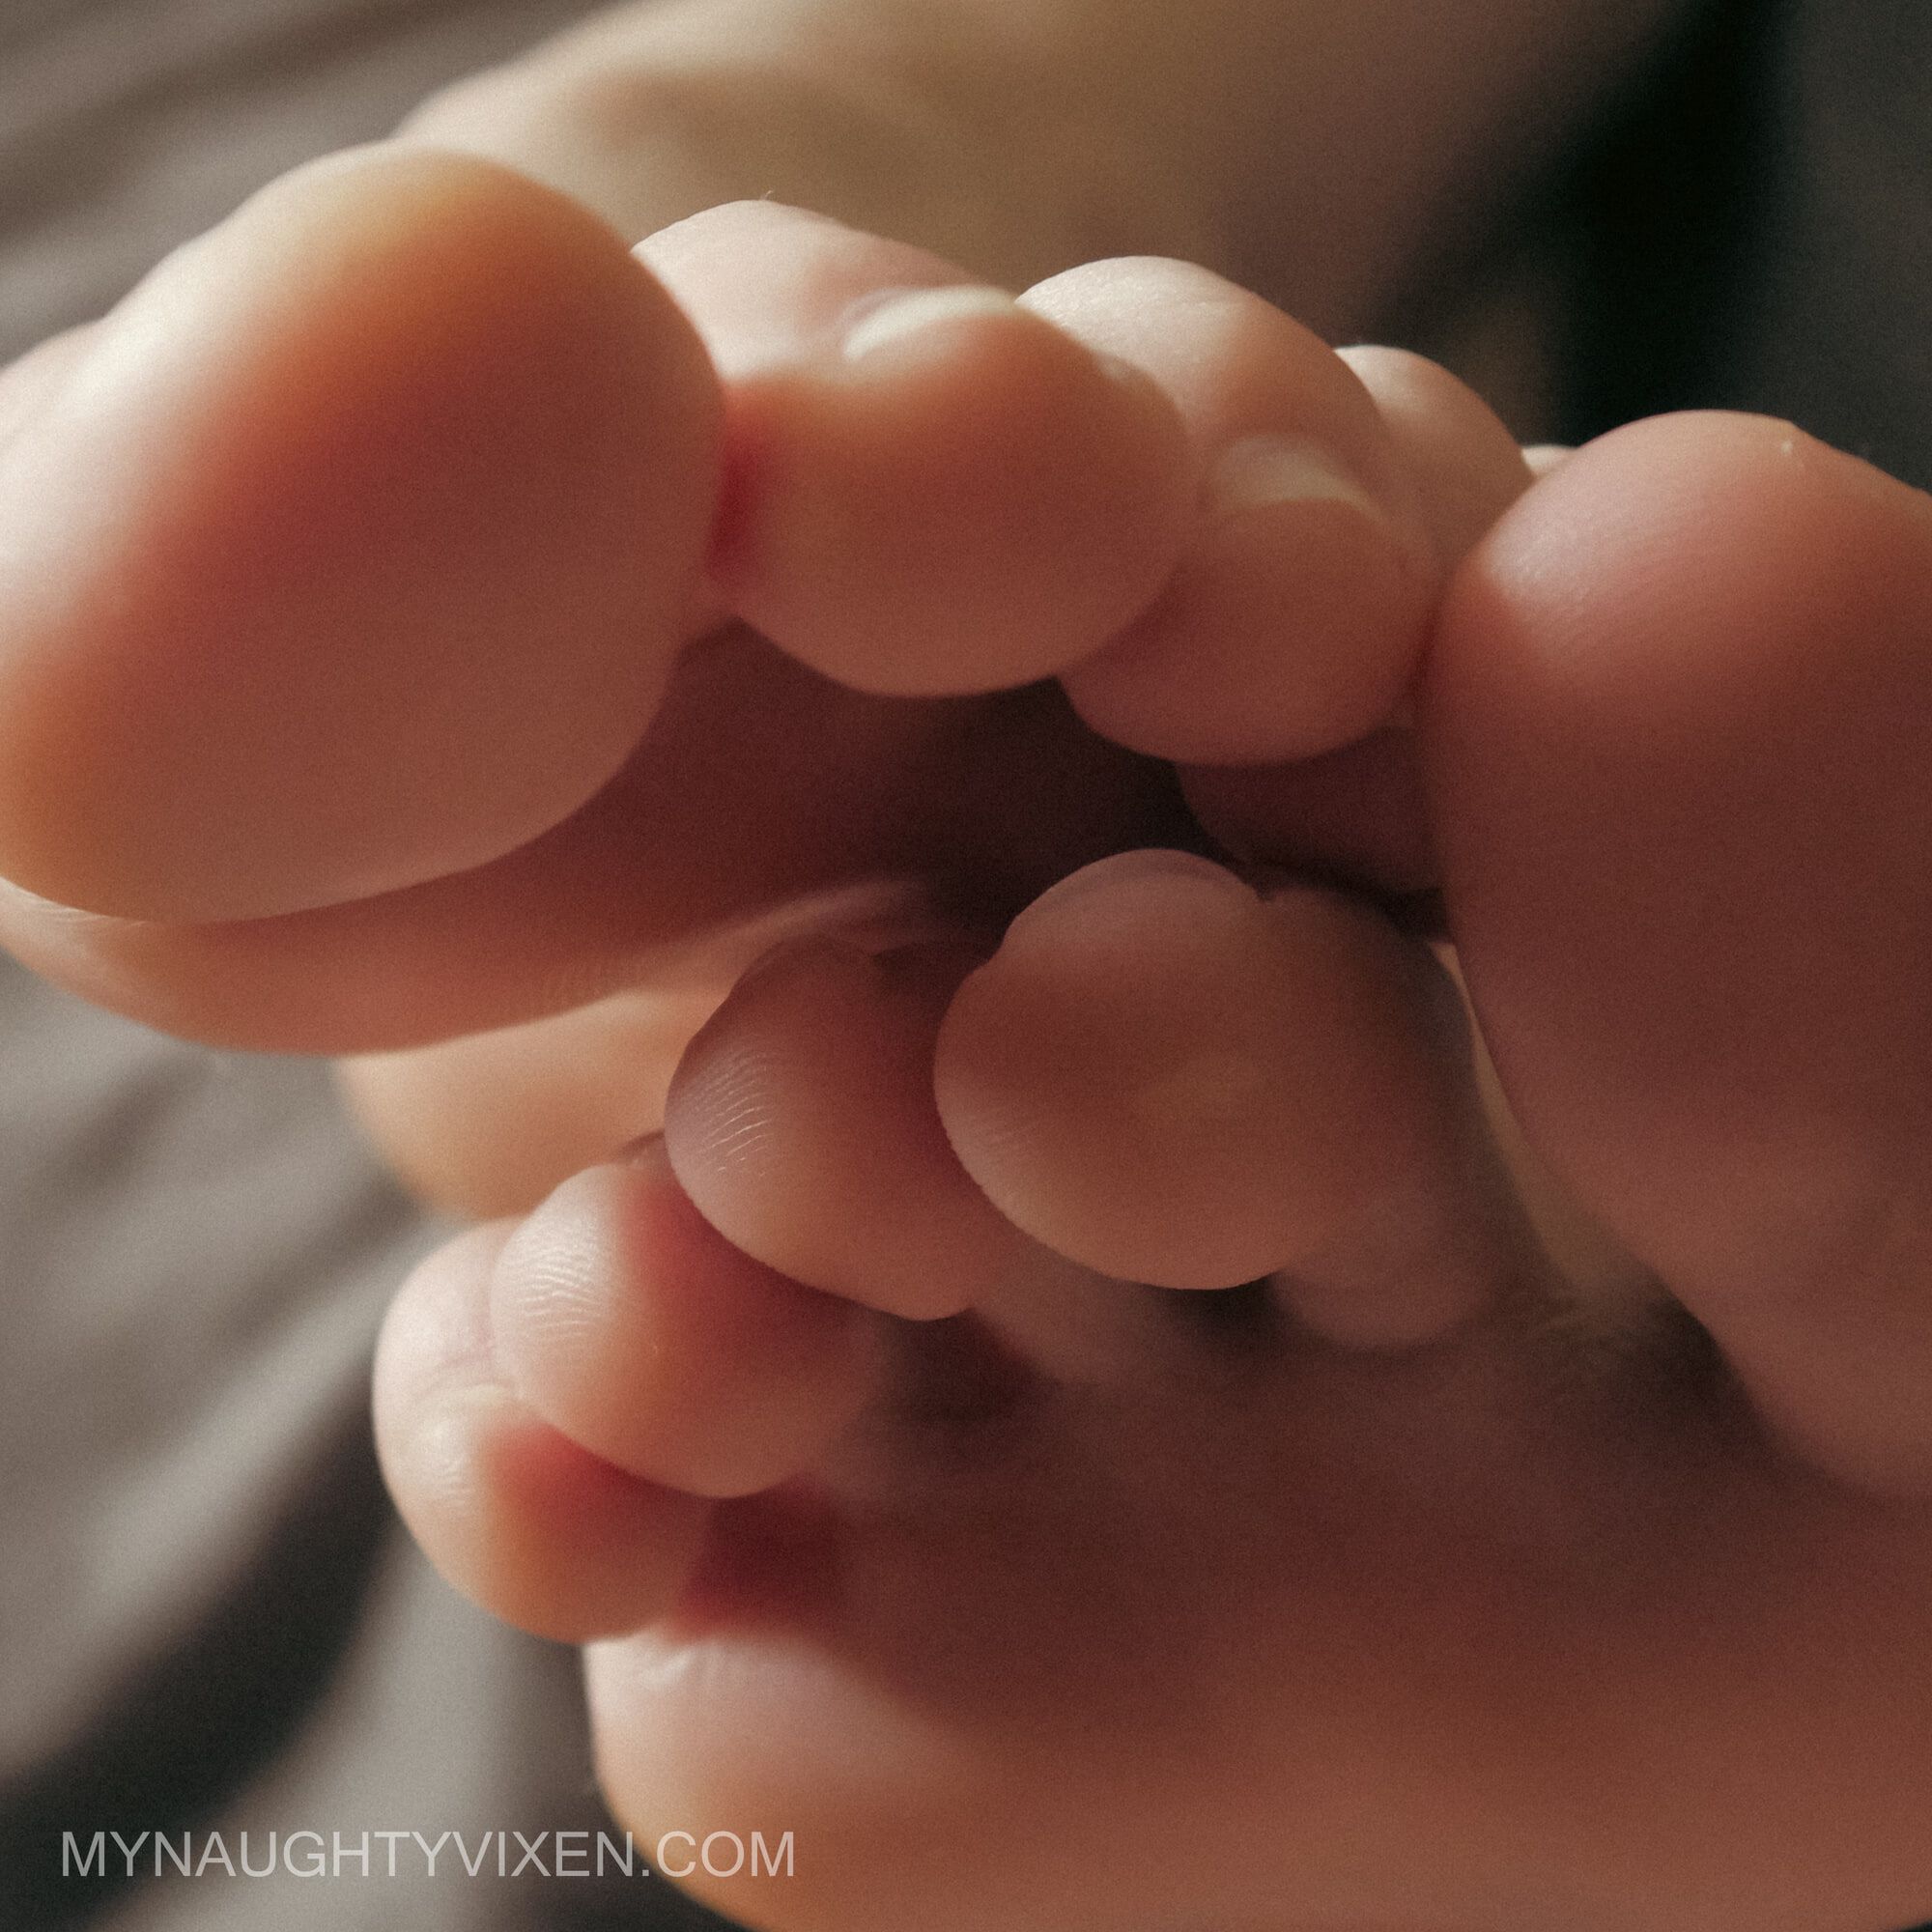 Her beautiful toes, foot fetish